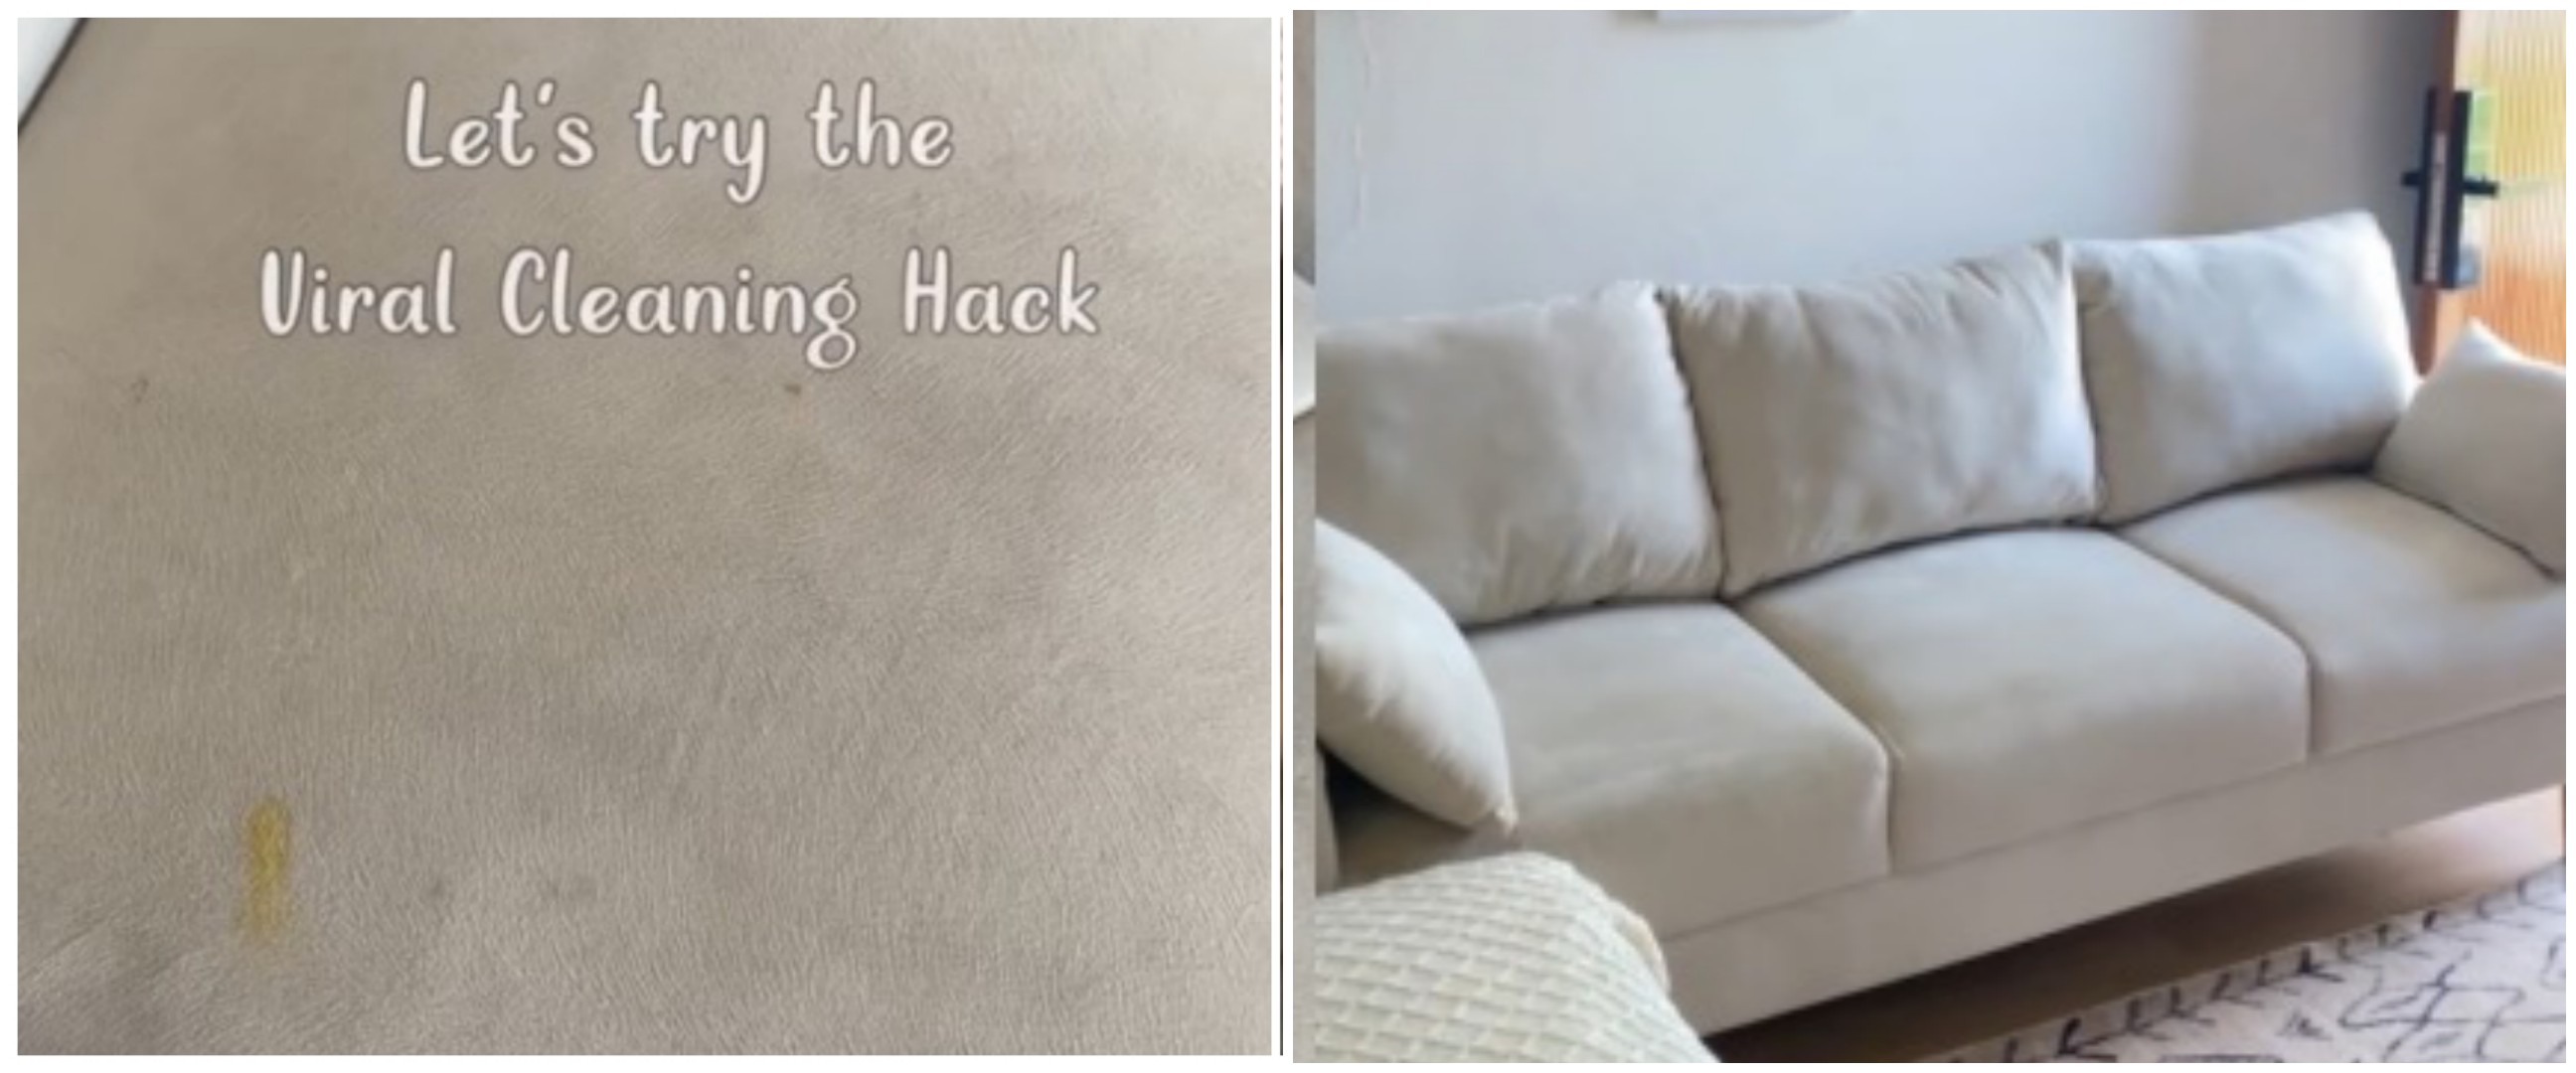 Nggak bikin malu kalau dilihat tamu, begini cara hilangkan noda membandel di sofa pakai tutup panci